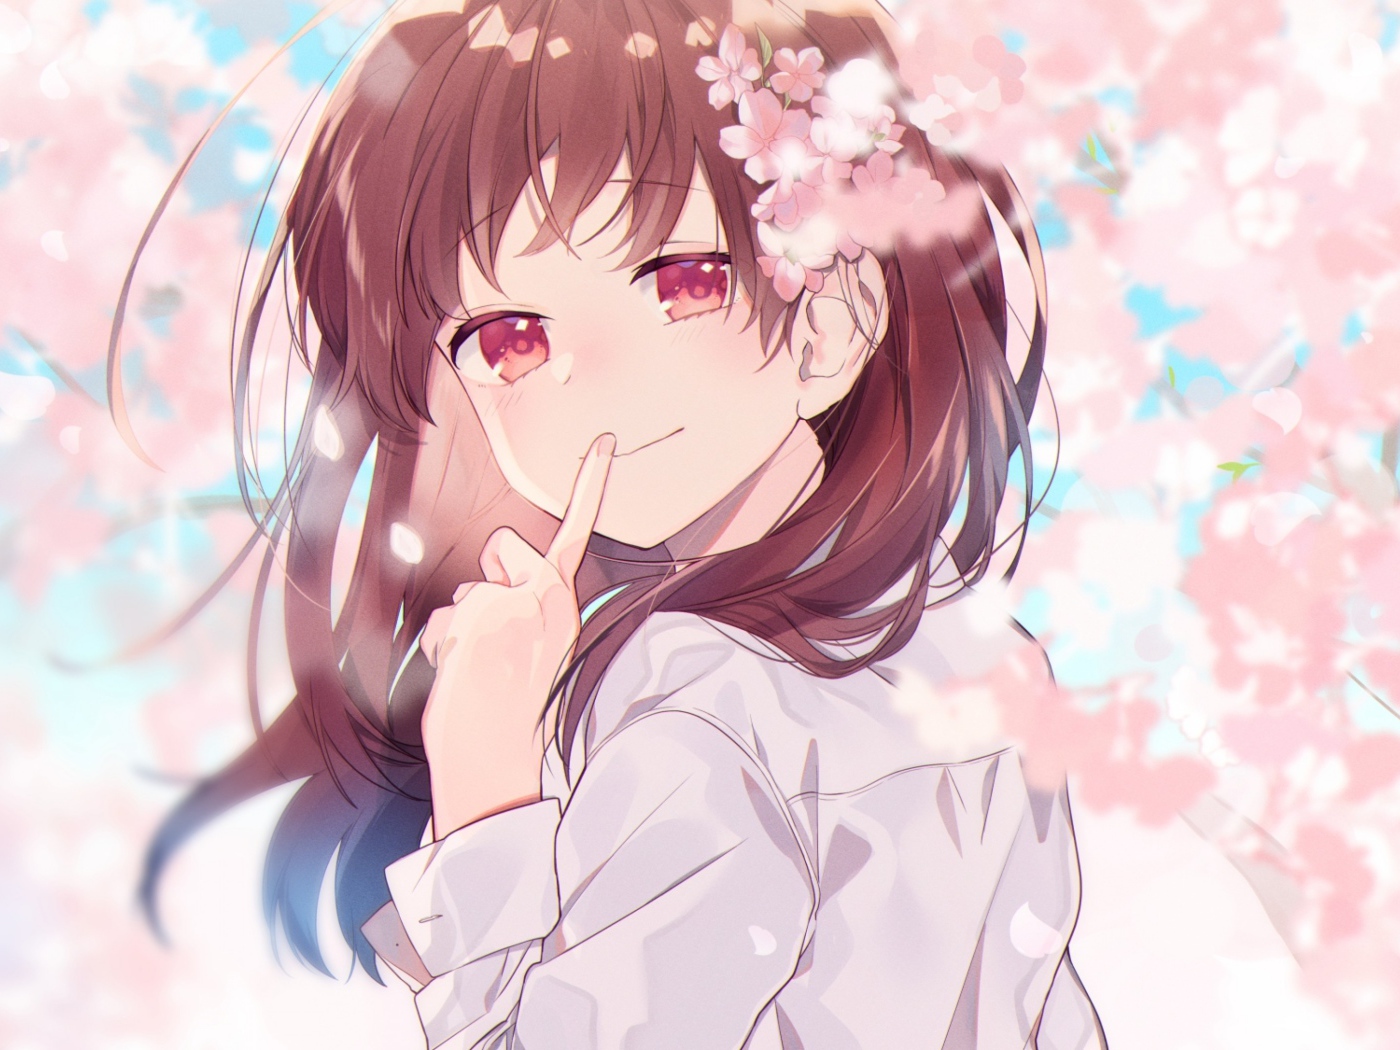 Anime girl with sakura flowers in her hair